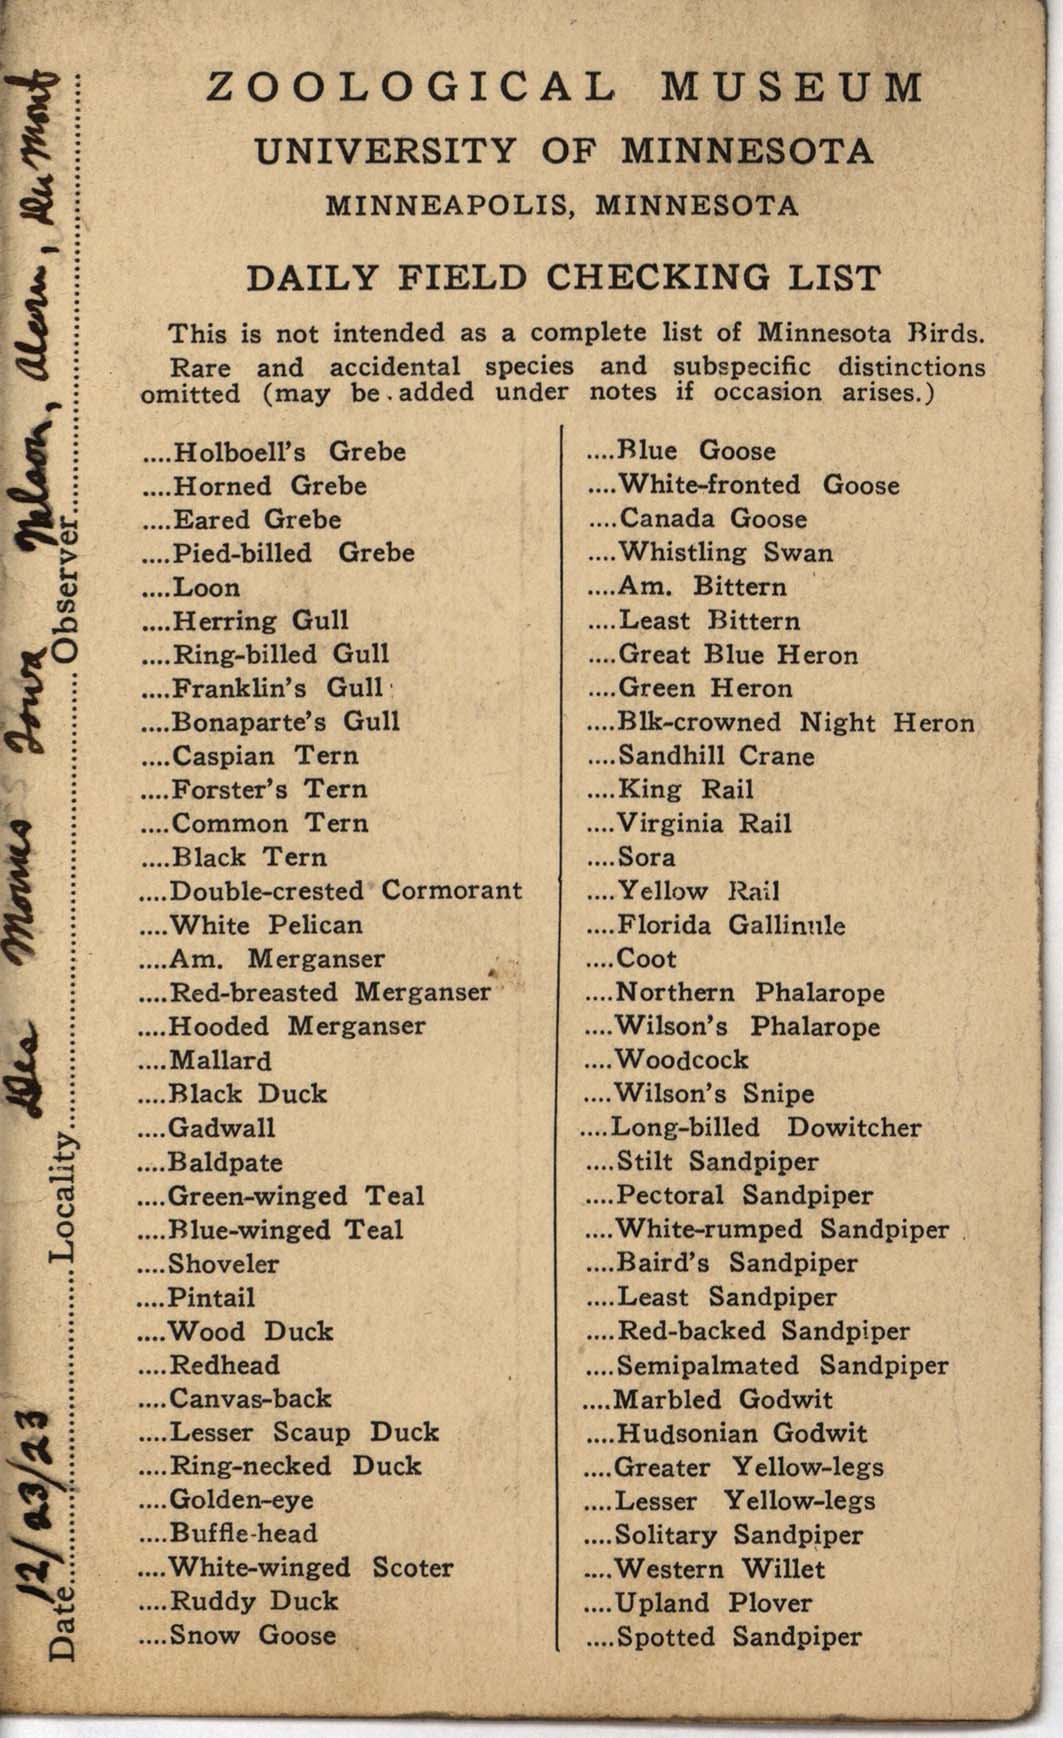 Daily field checking list, Philip DuMont, December 23, 1923